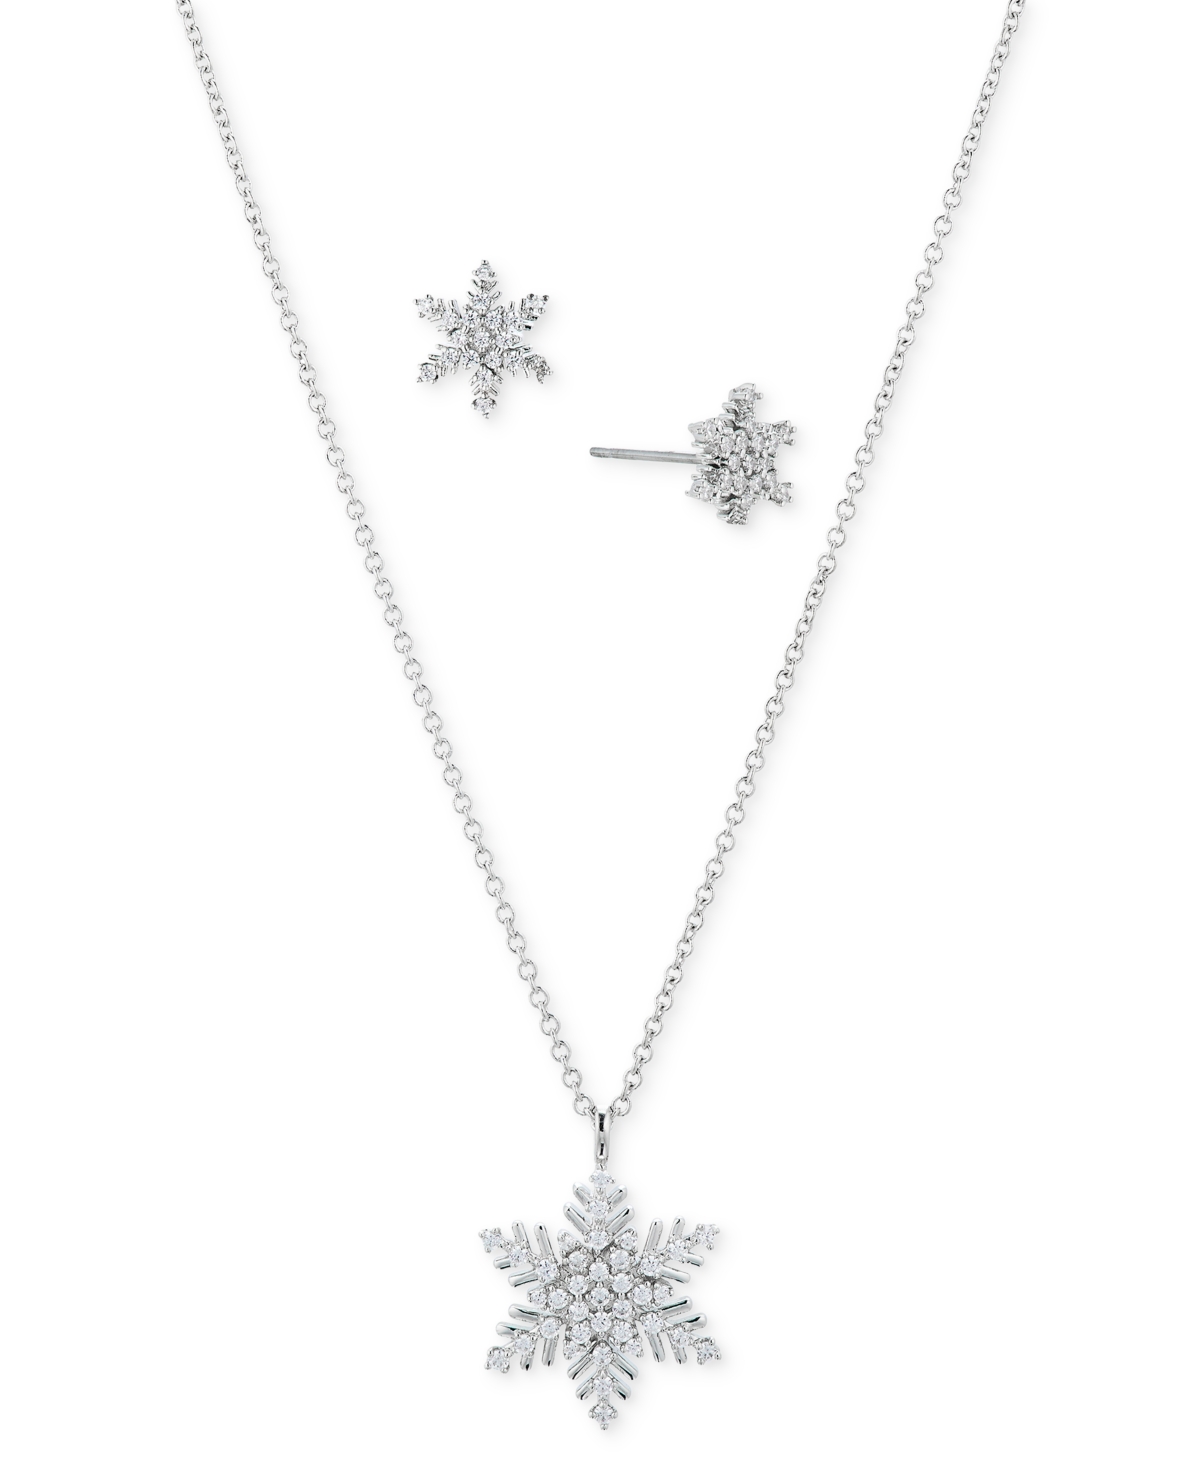 Silver-Tone Crystal Snowflake Necklace & Earrings Set, 16" + 2" extender - Rhodium